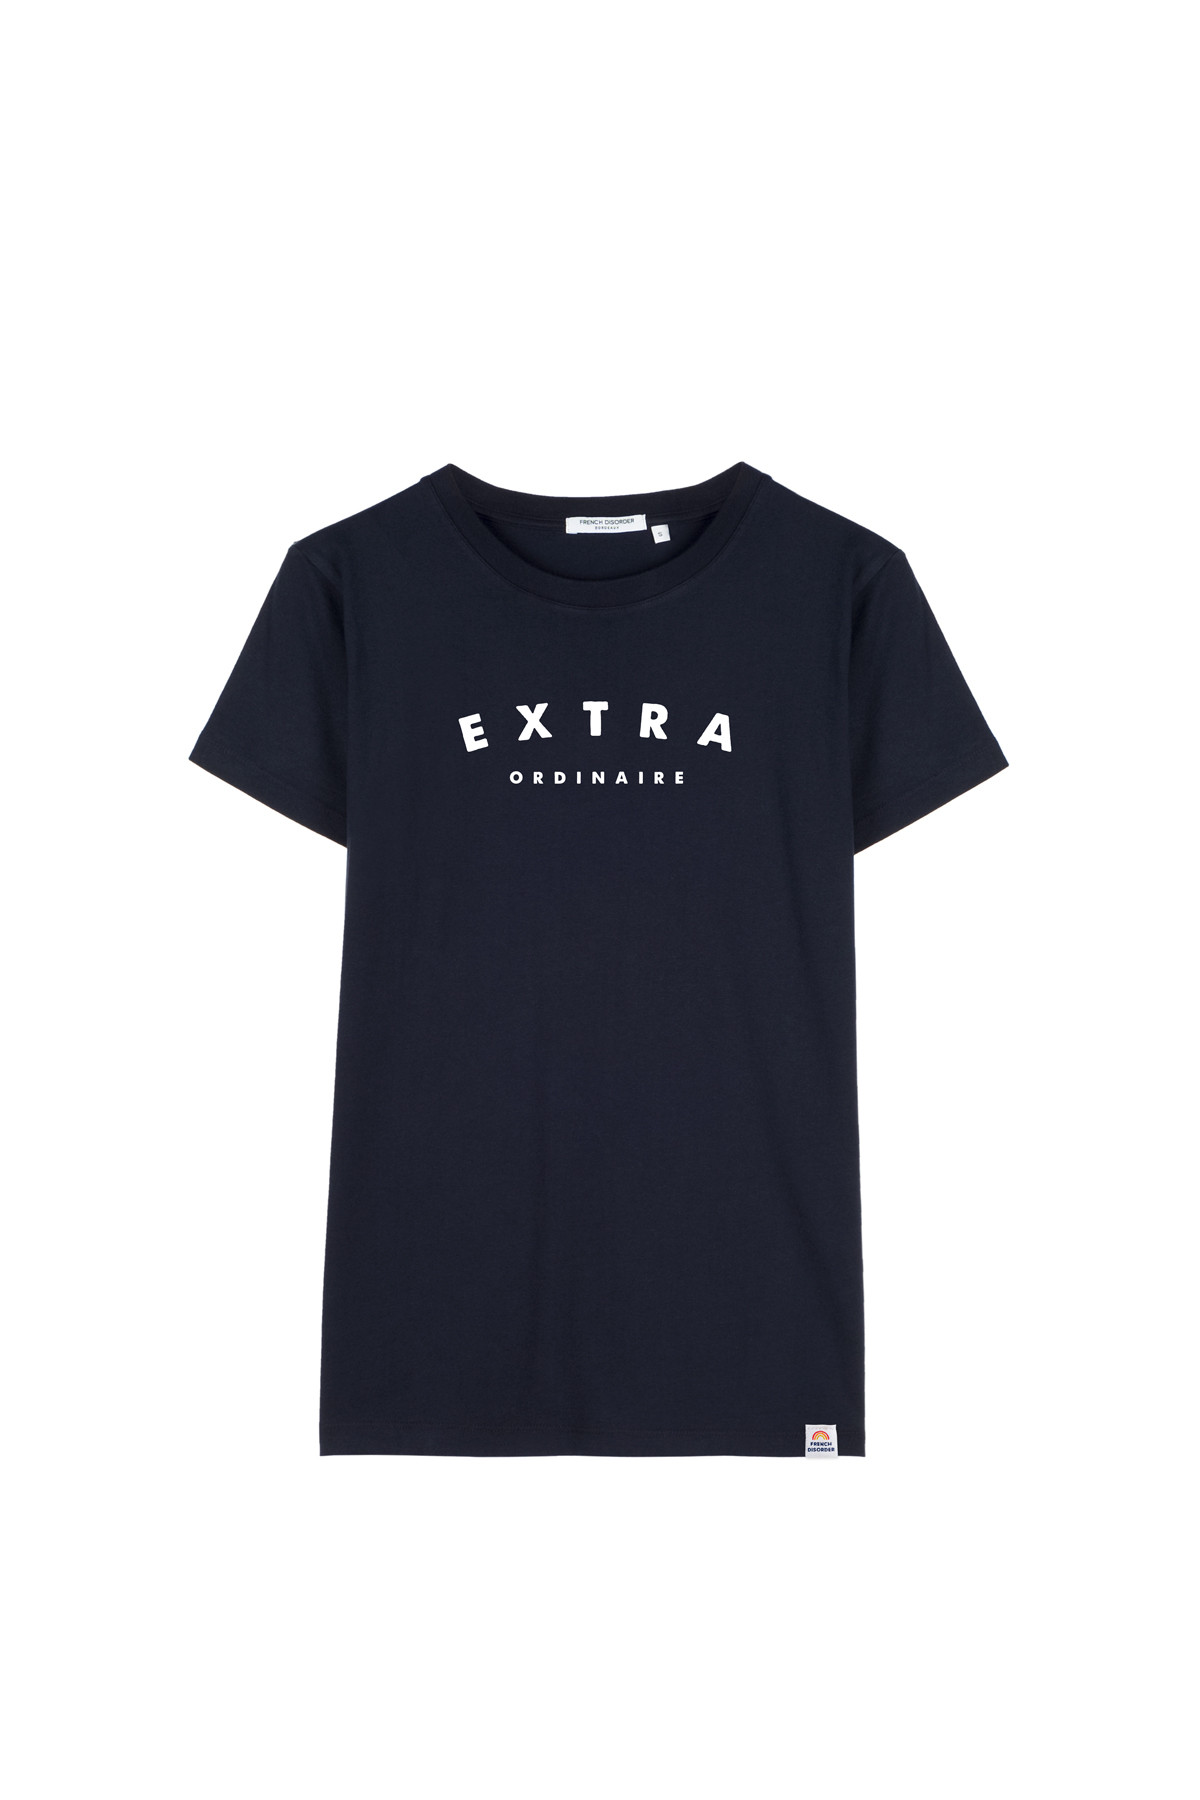 Tshirt EXTRA French Disorder